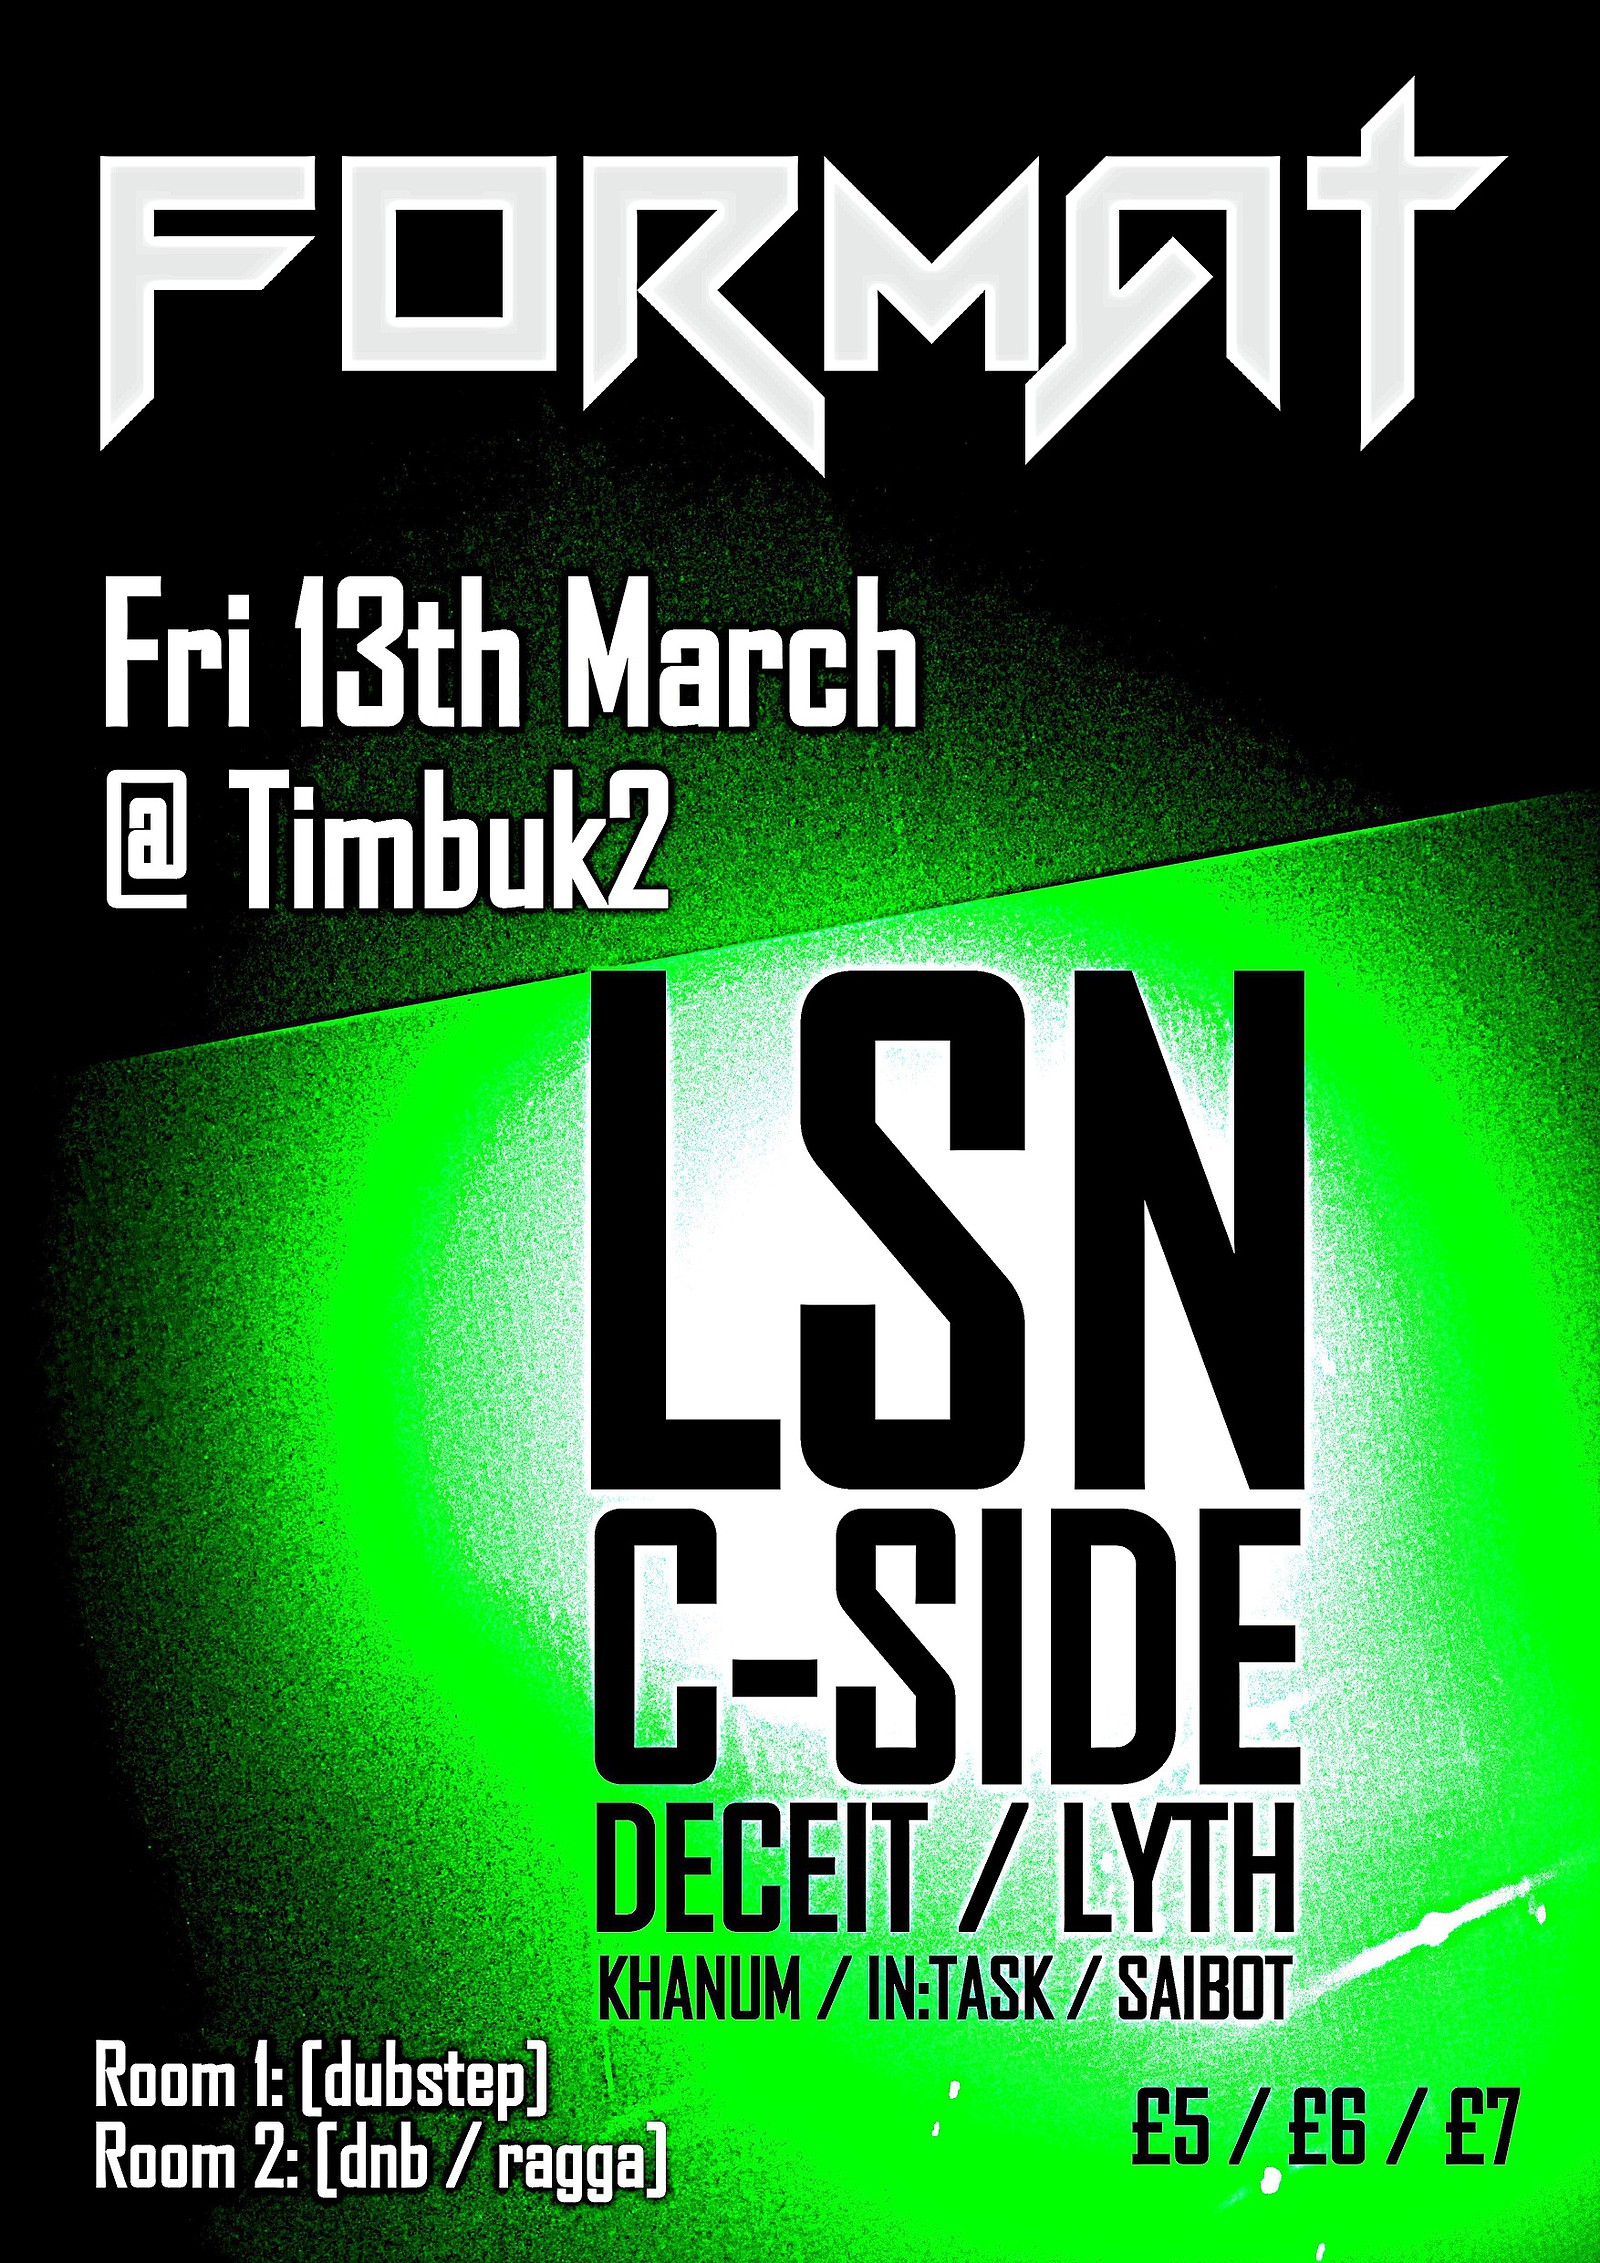 Format Feat. Lsn + C-side at Timbuk2 / Bristol